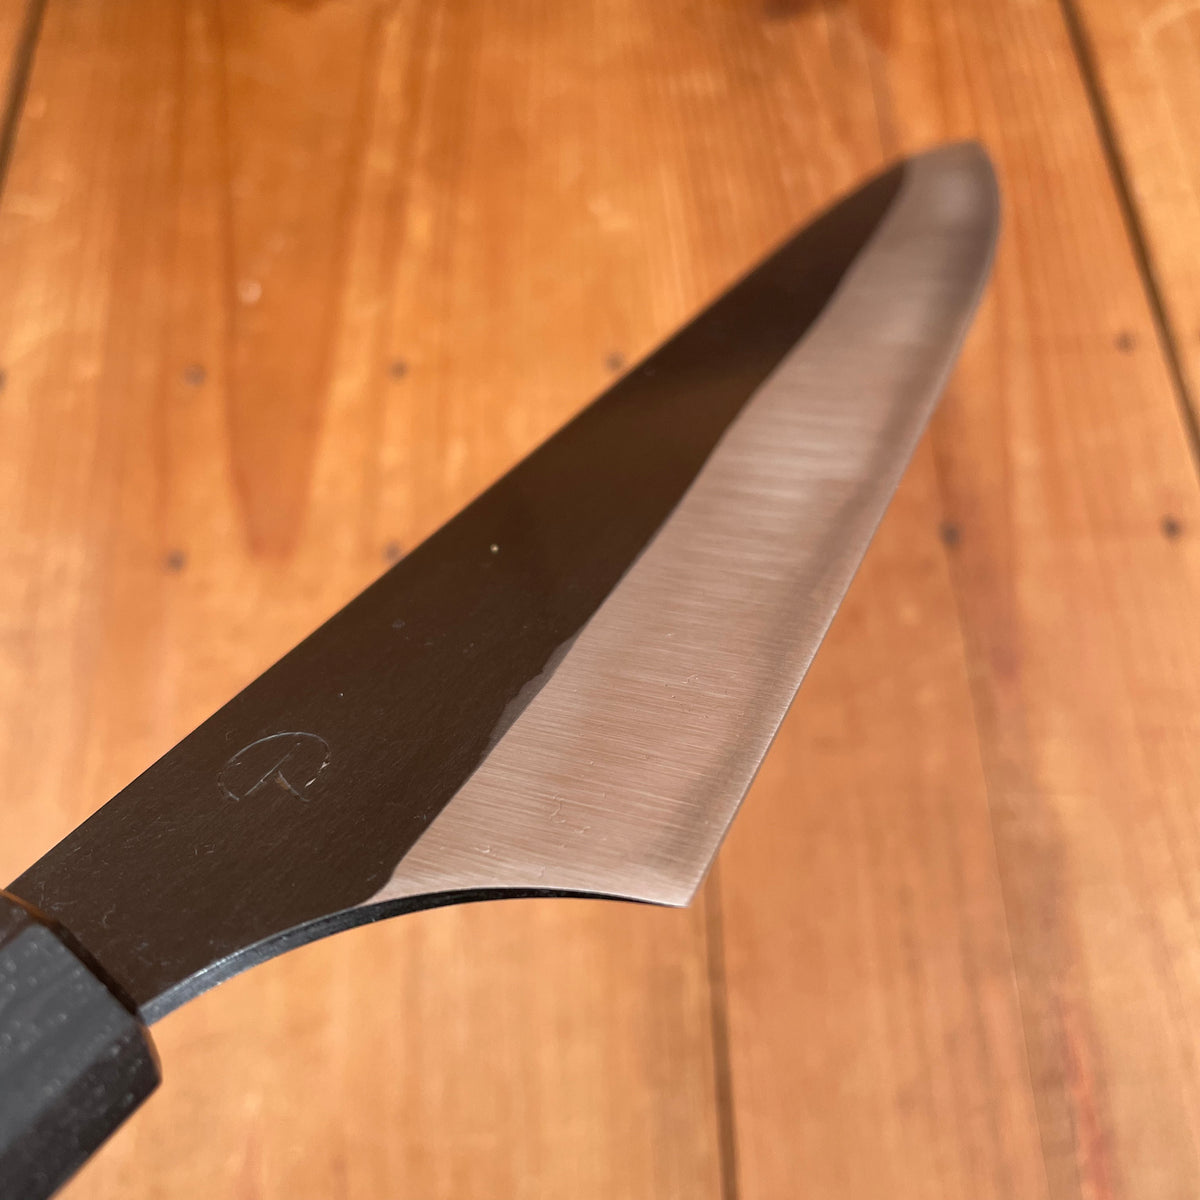 Alma Knife Co. 210mm Kiritsuke Gyuto 52100 Kurouchi - 10,000Yr Old Bog Oak